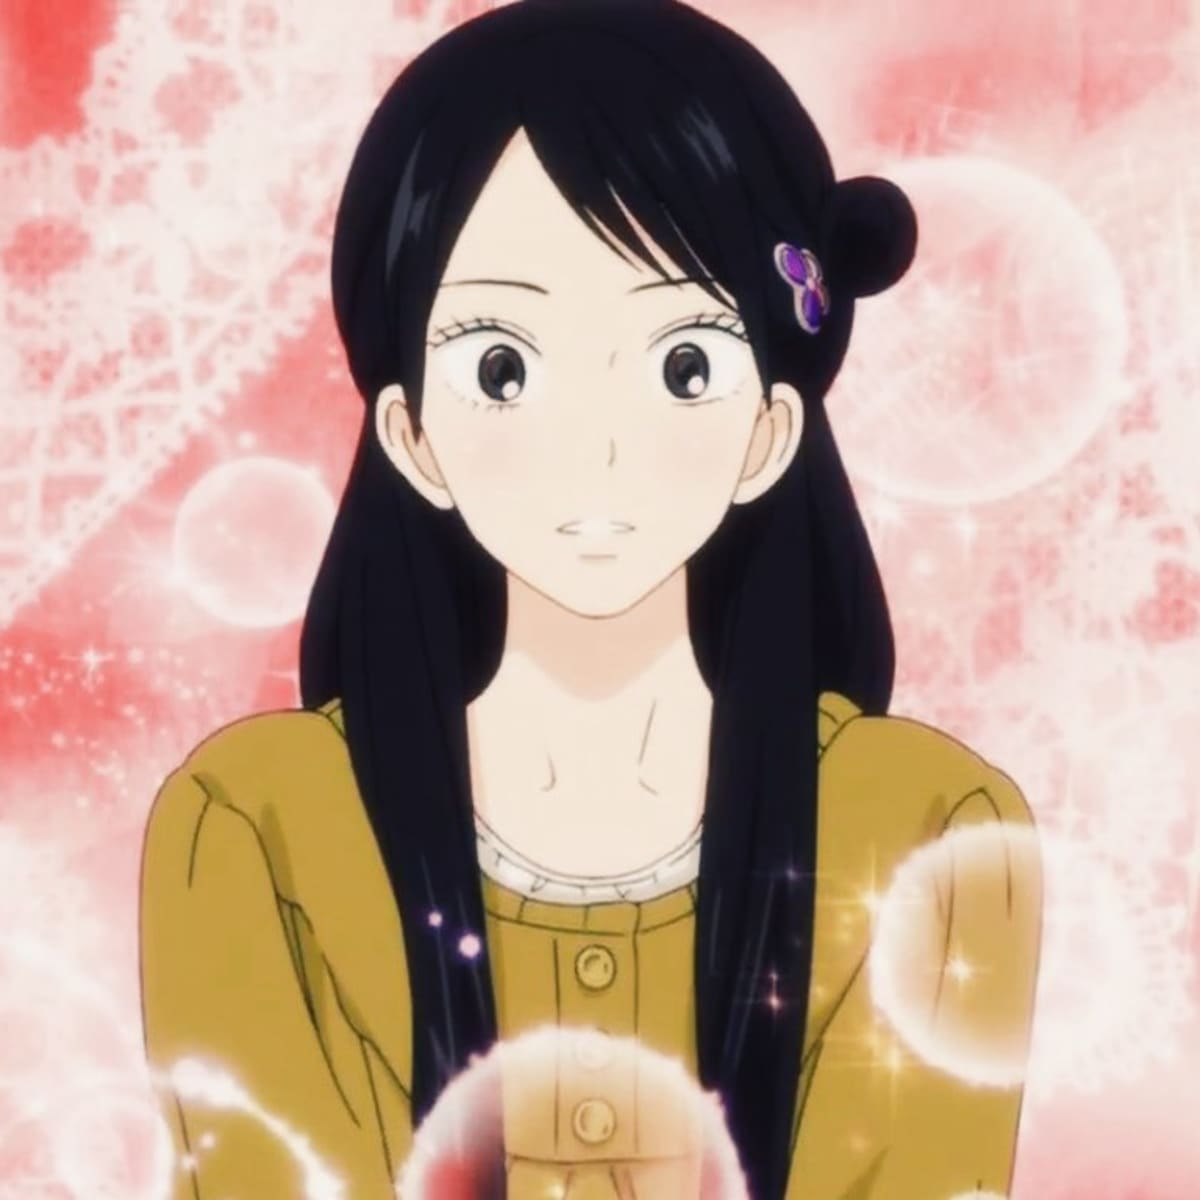 Bishoujo: The Most Beautiful Female Anime Characters Ever - ReelRundown